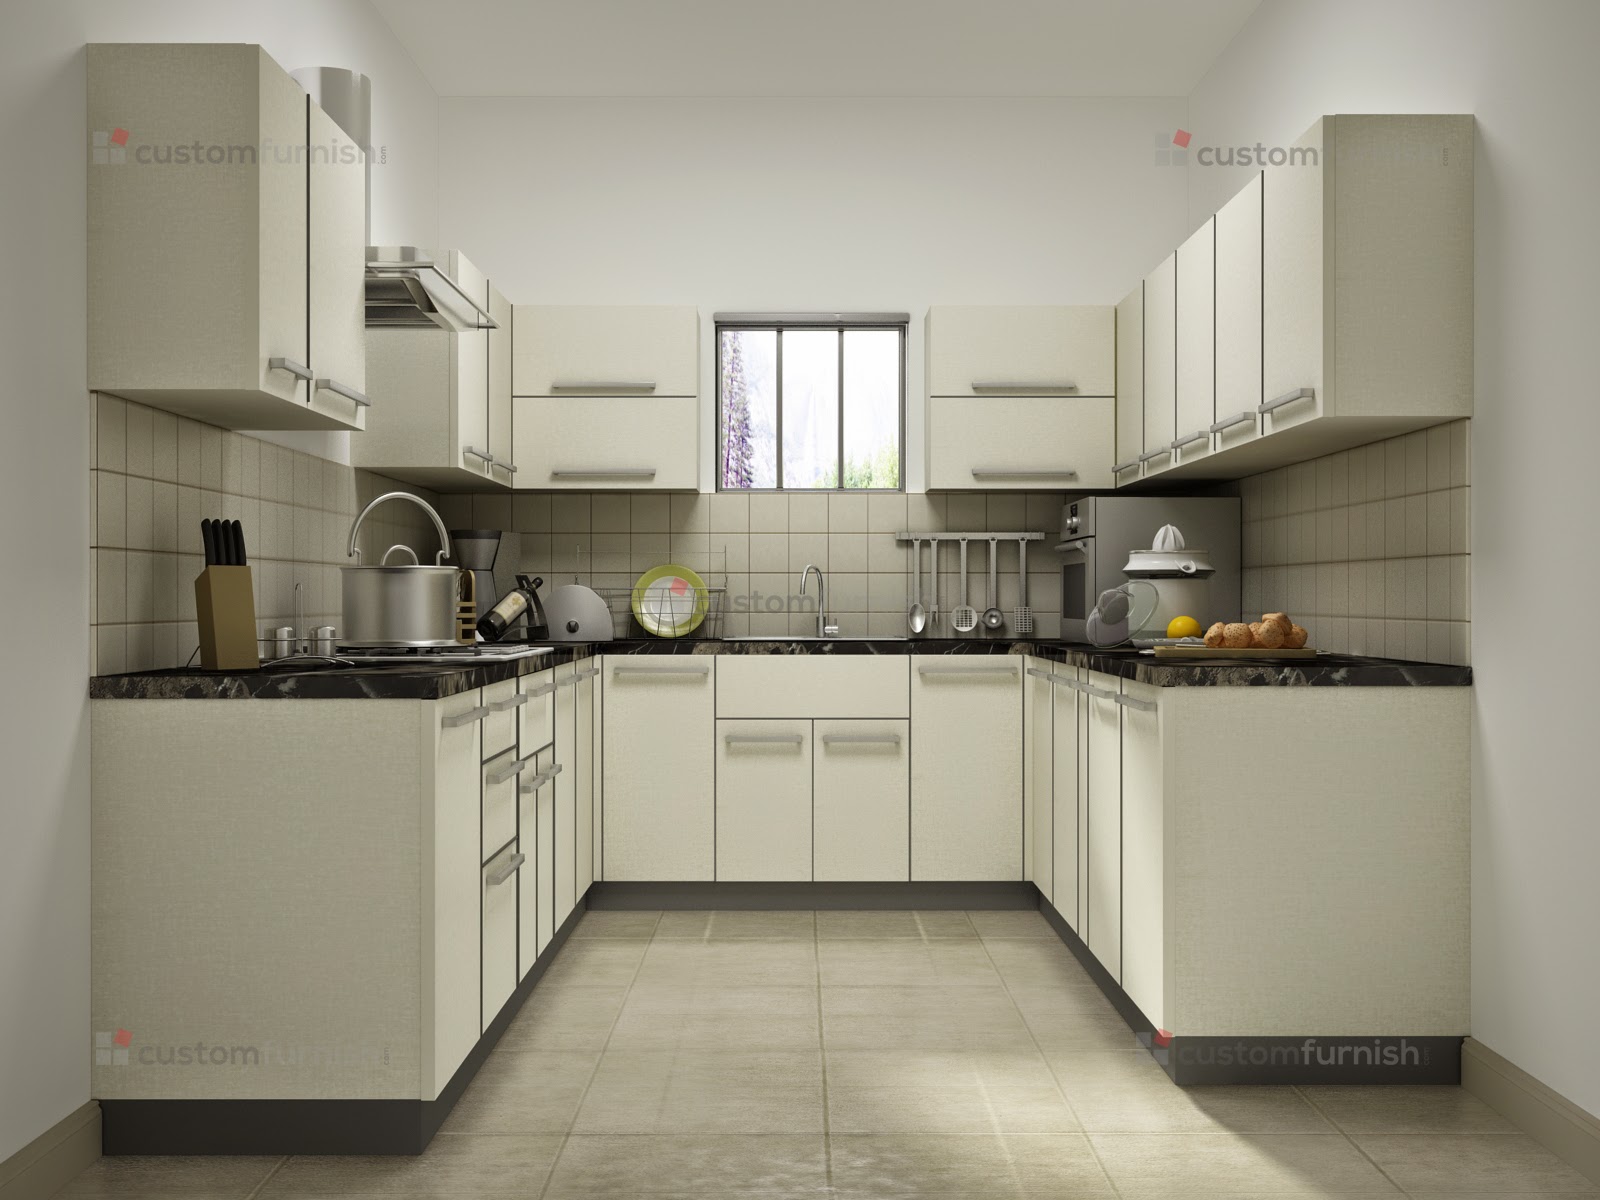 Stylish and modern Kitchens | Interior Decor Blog - Customfurnish.com